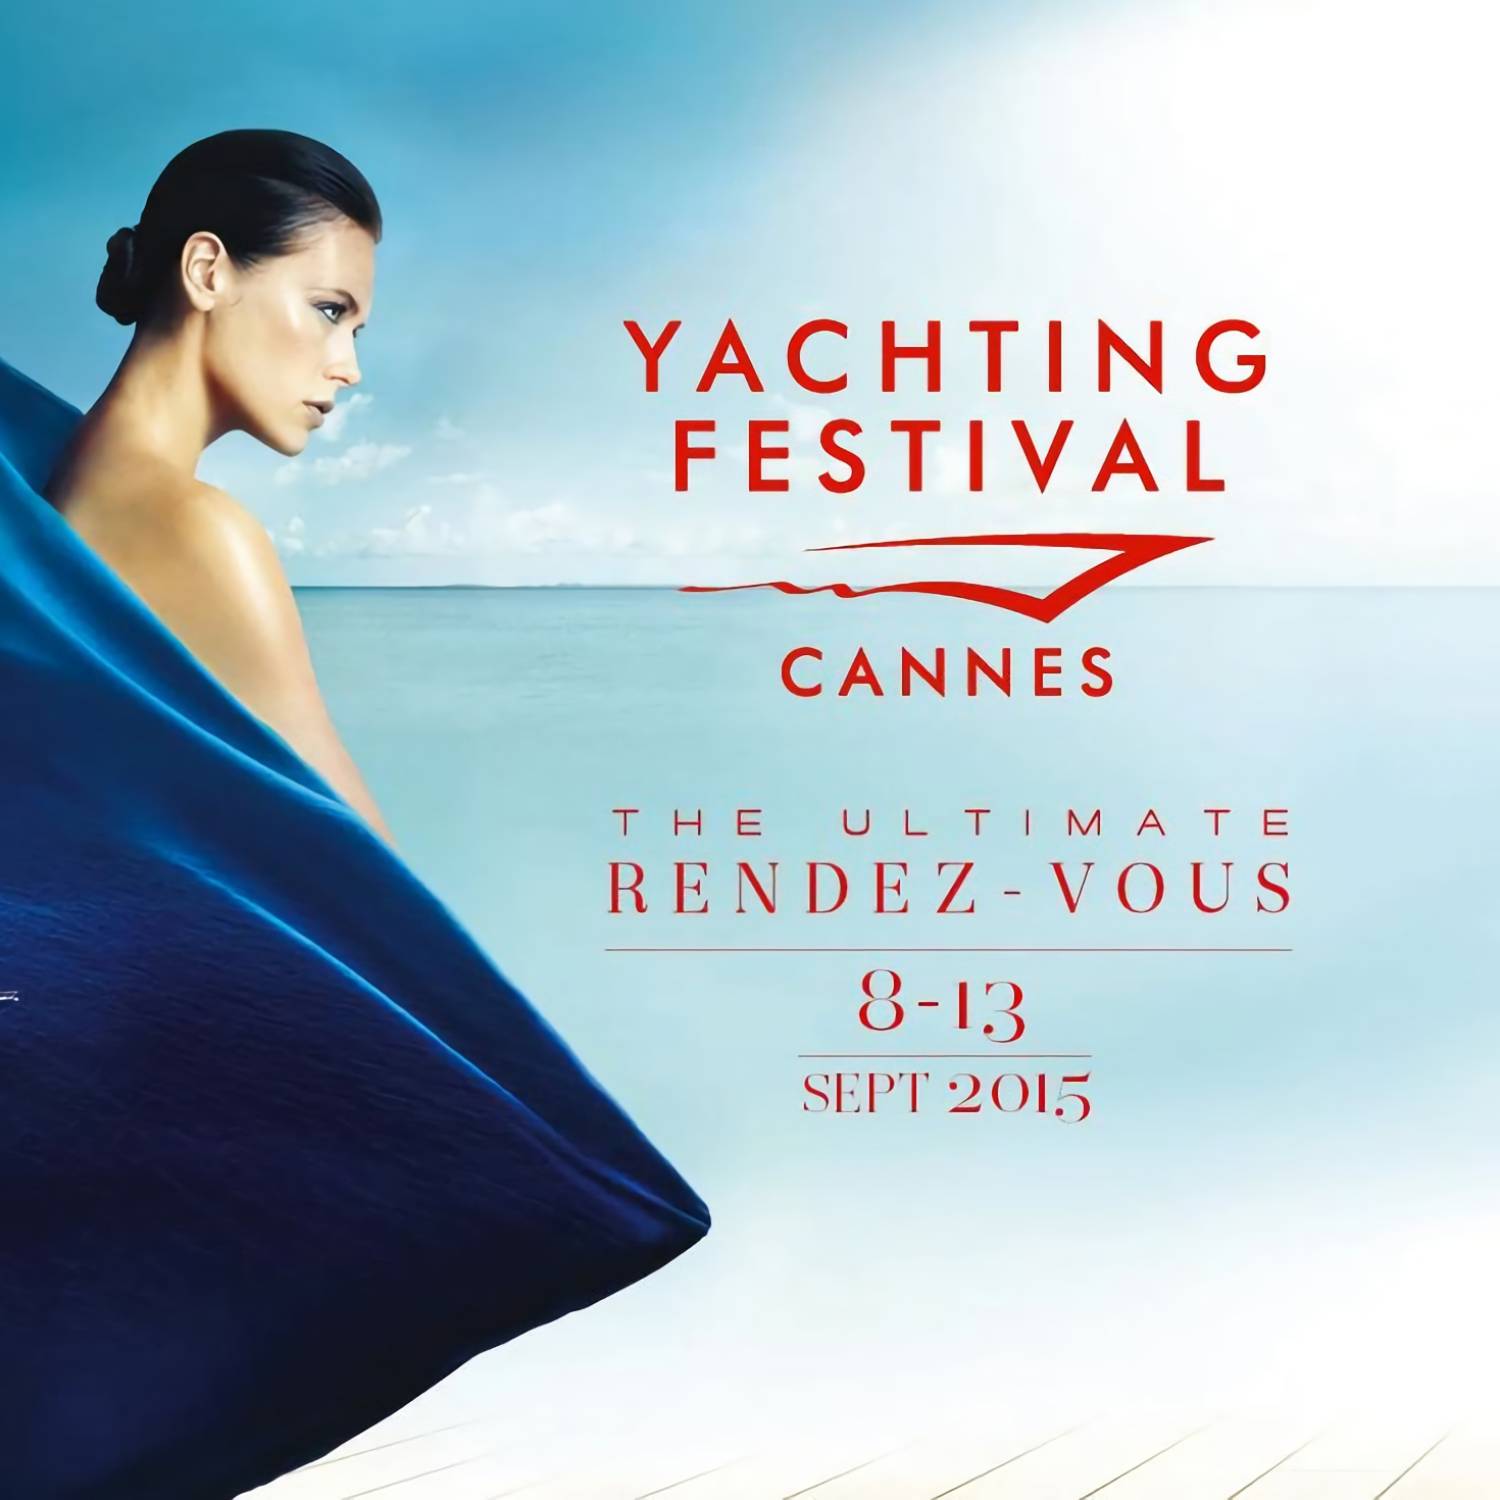 Zapraszamy na targi jachtowe Cannes Yachting Festival 2015!